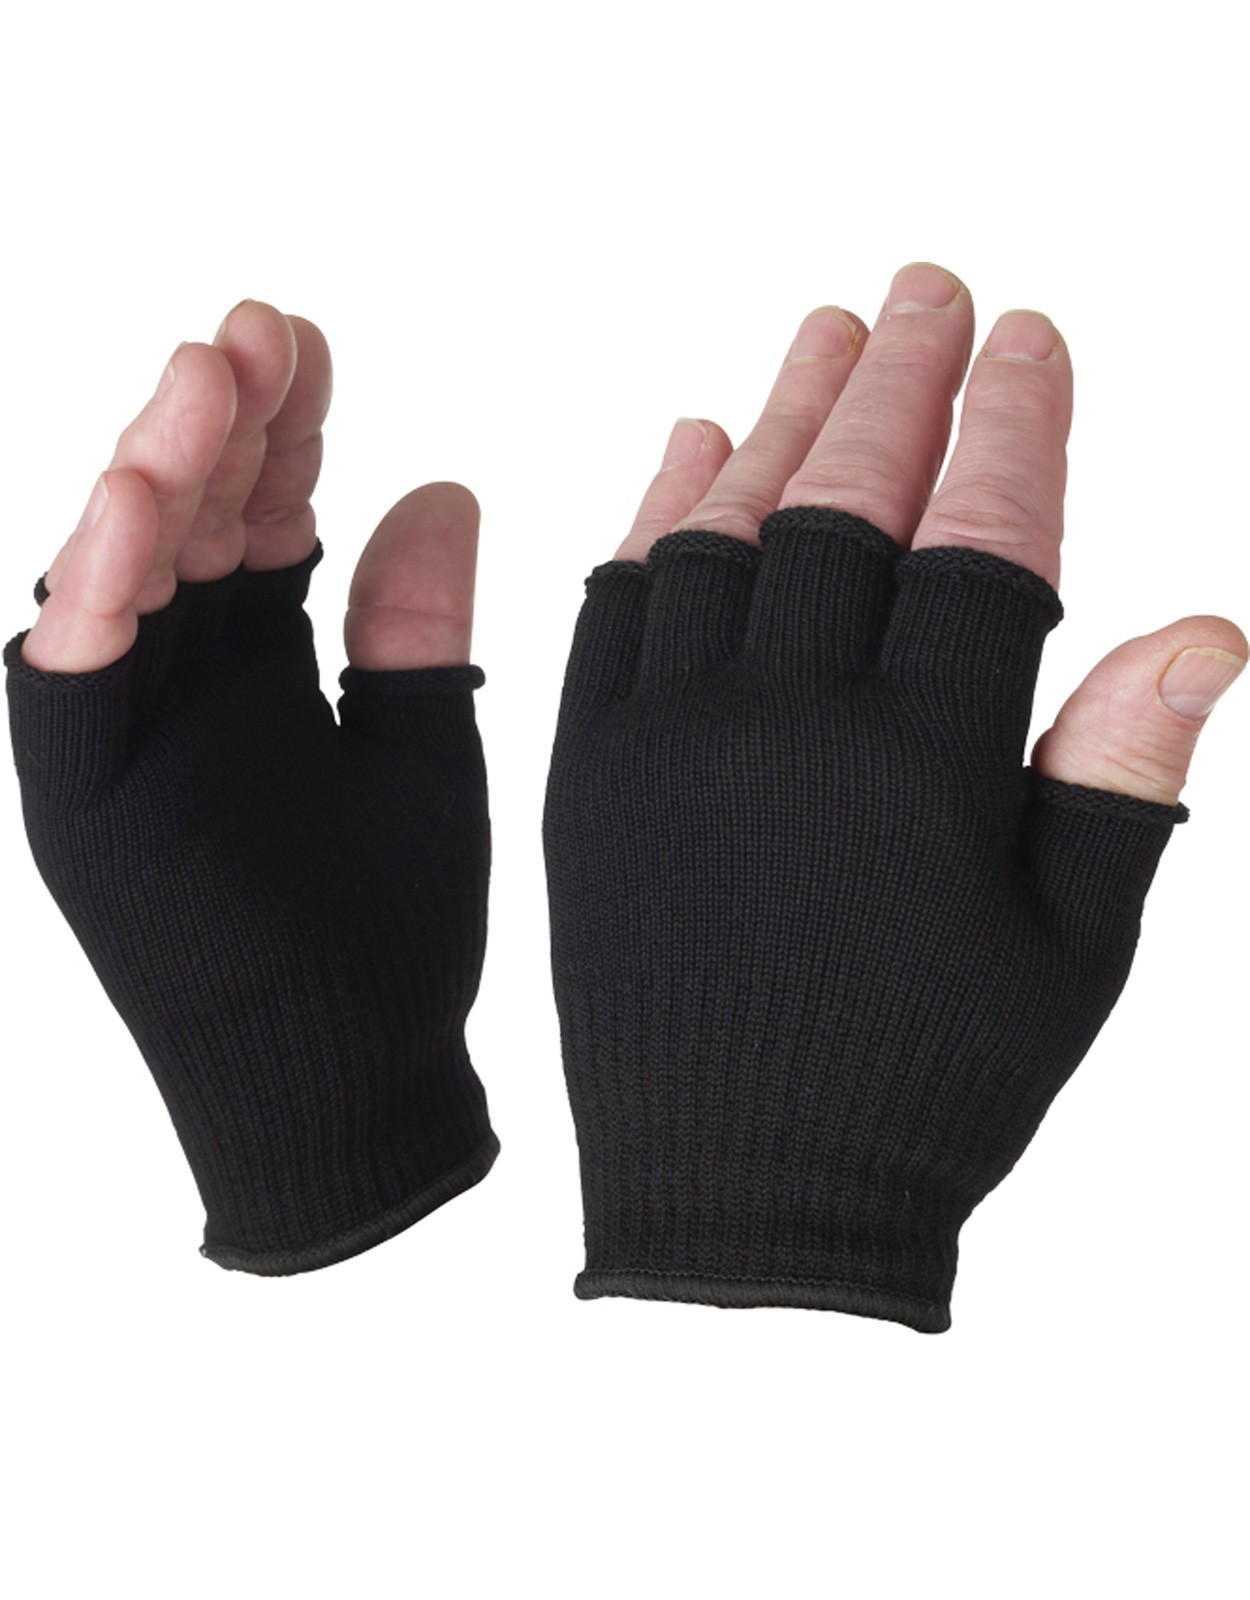 Sealskinz - Merino uld handsker